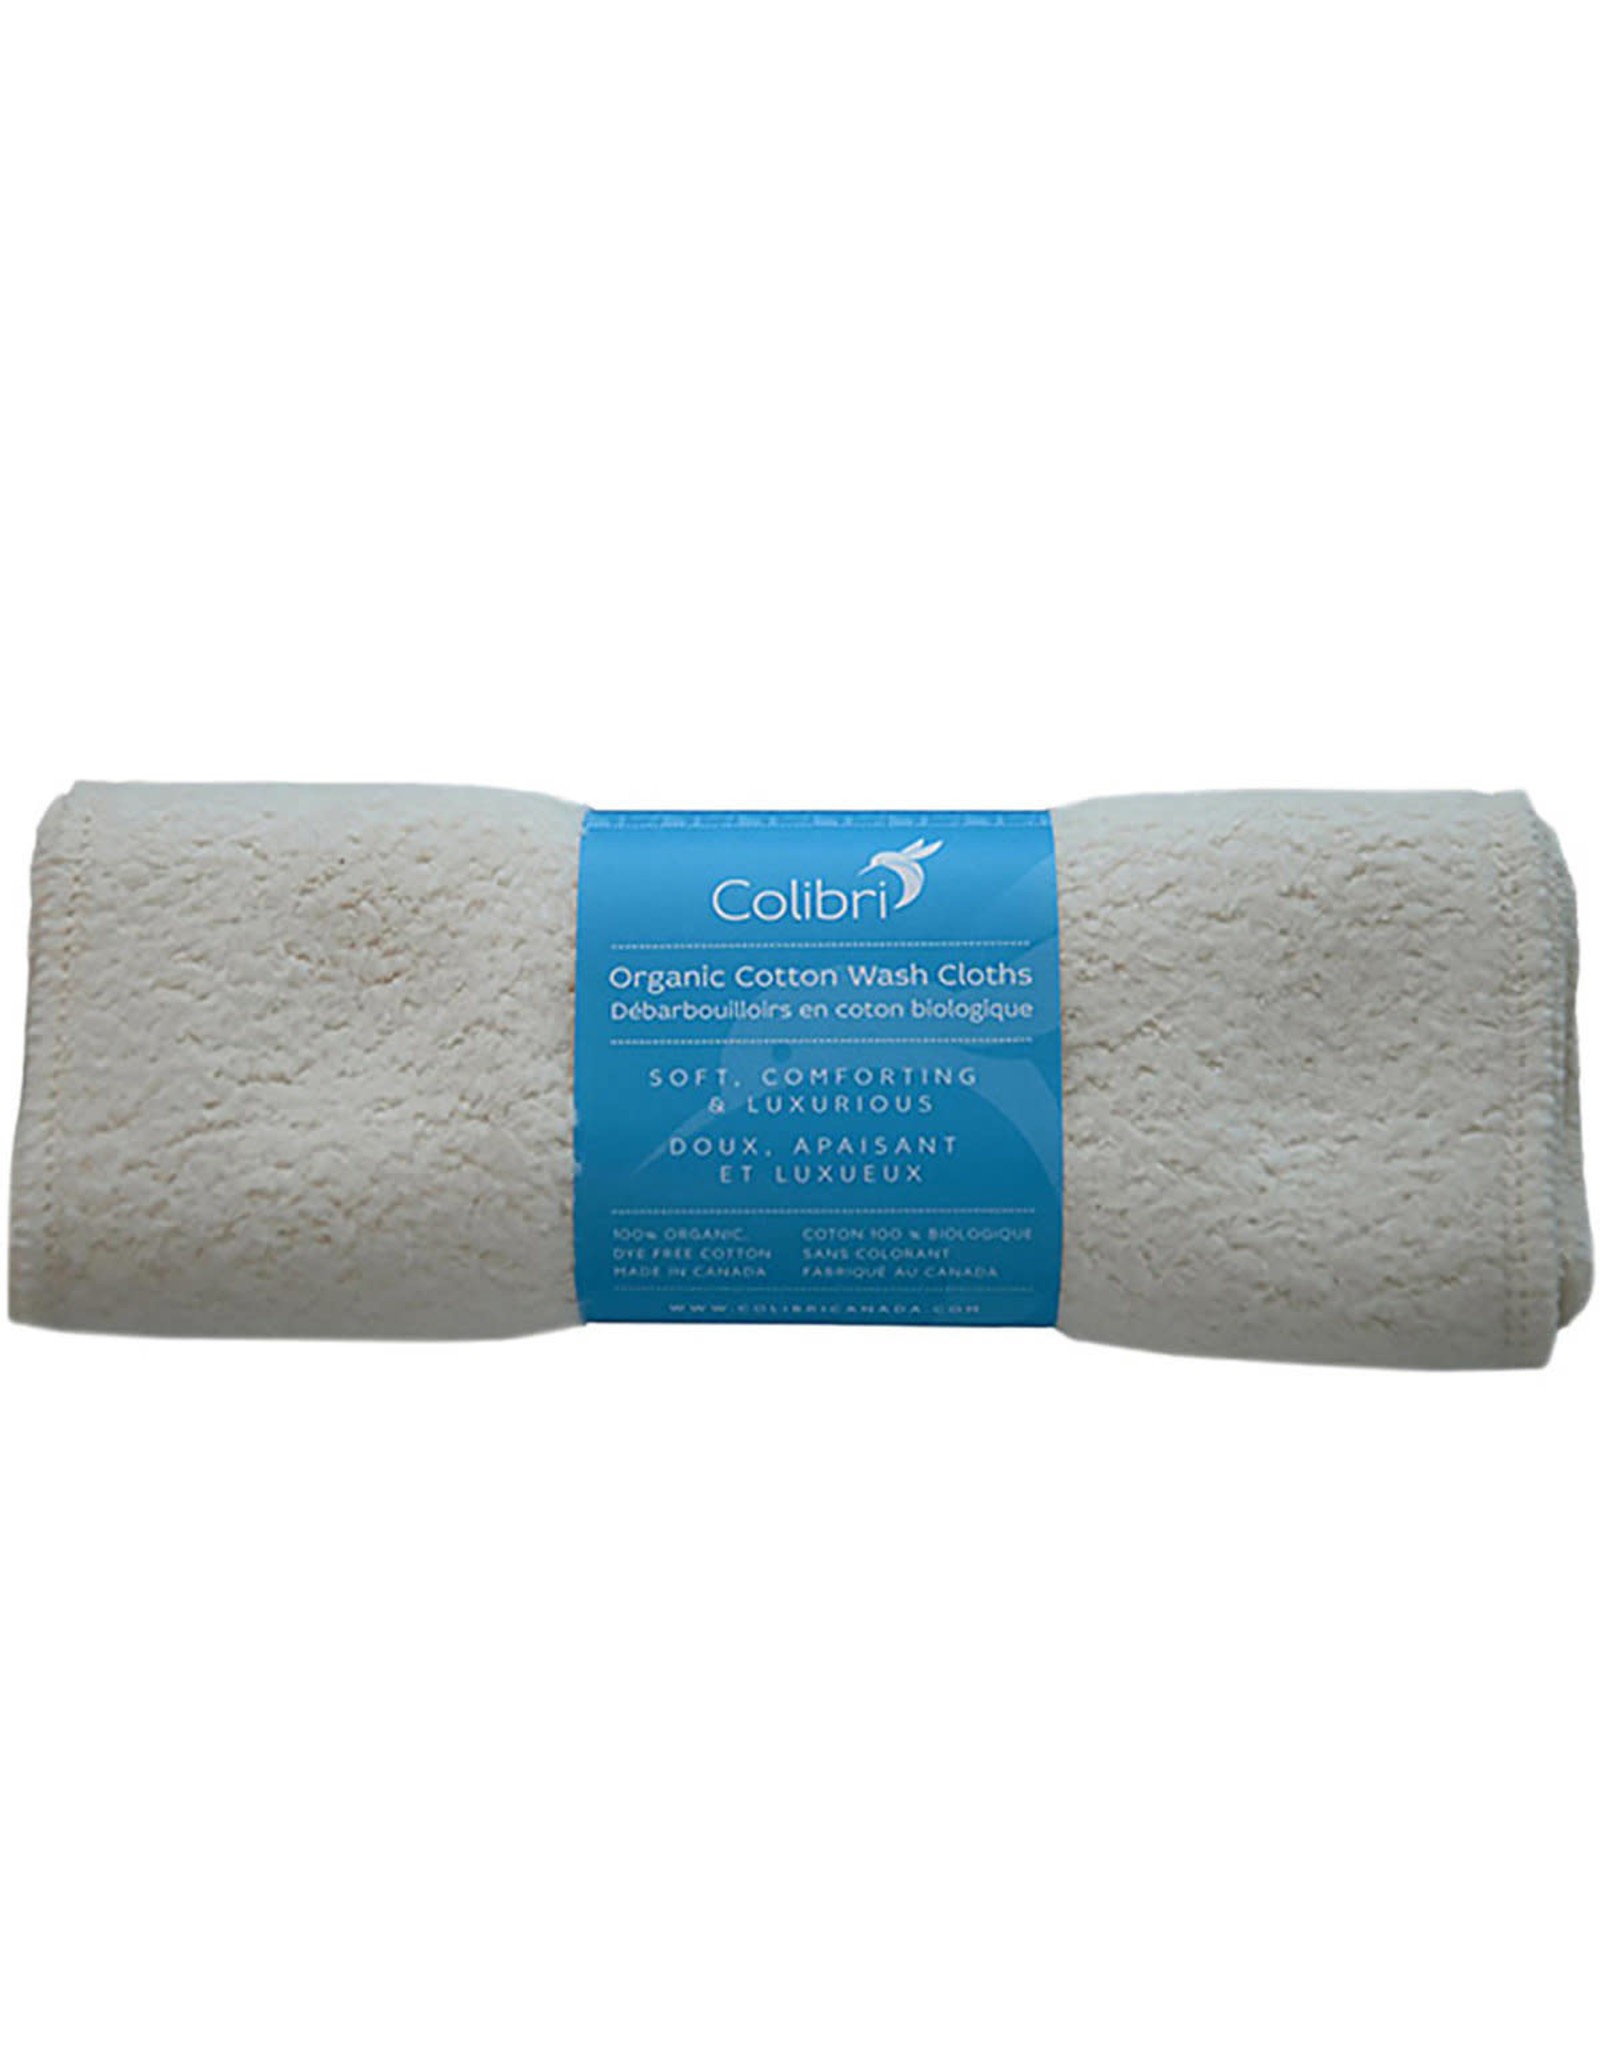 Colibri Organic Cotton Wash Cloths 5pk